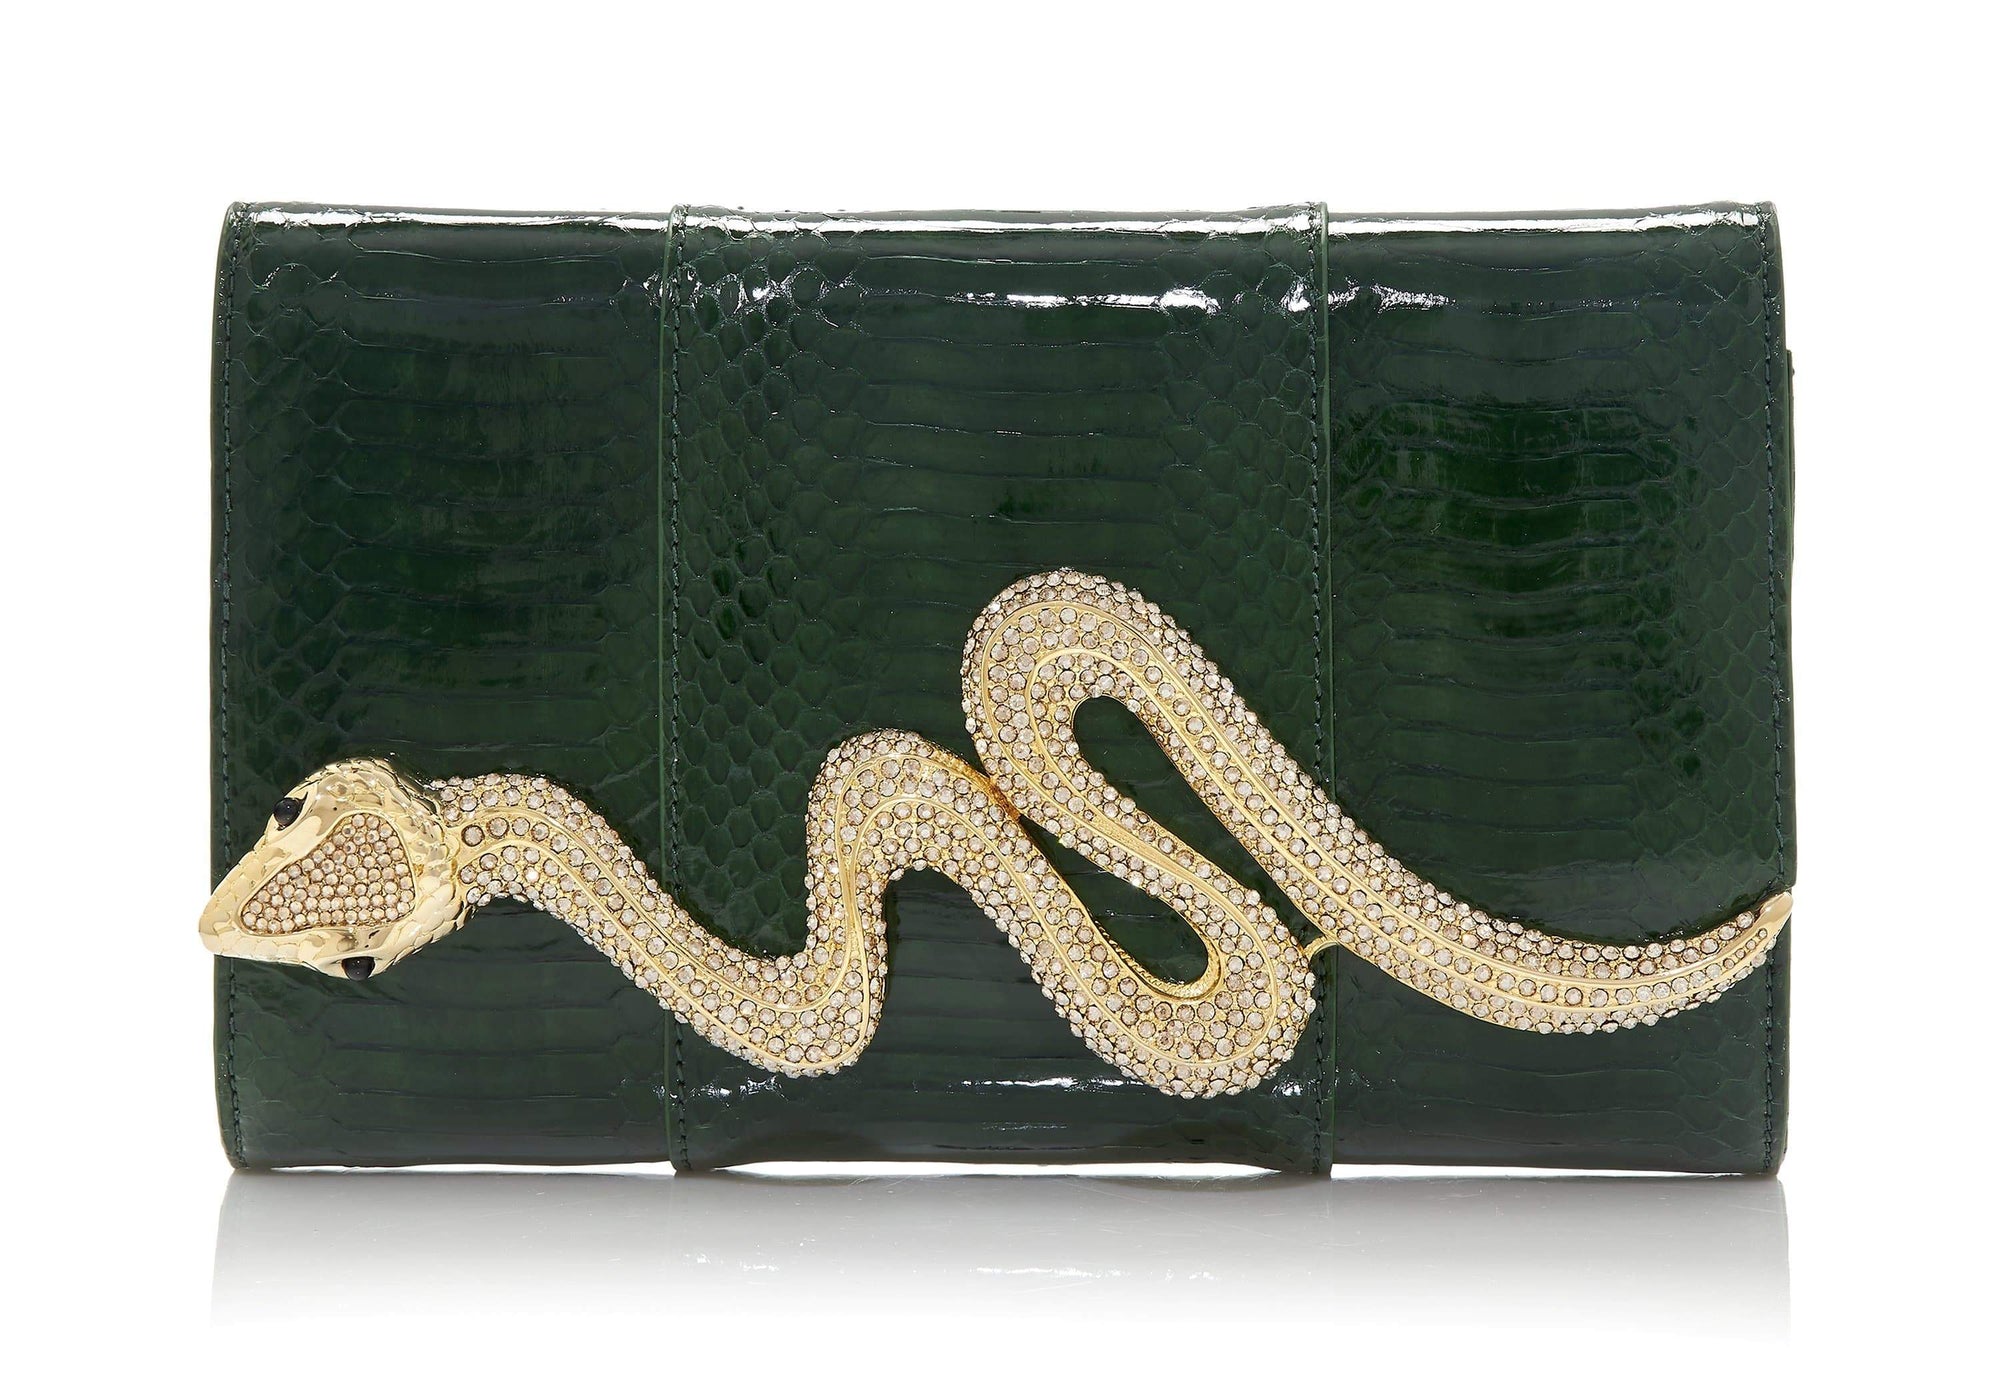 Exquisite Judith Leiber Porosus Crocodile Handbag 1960s